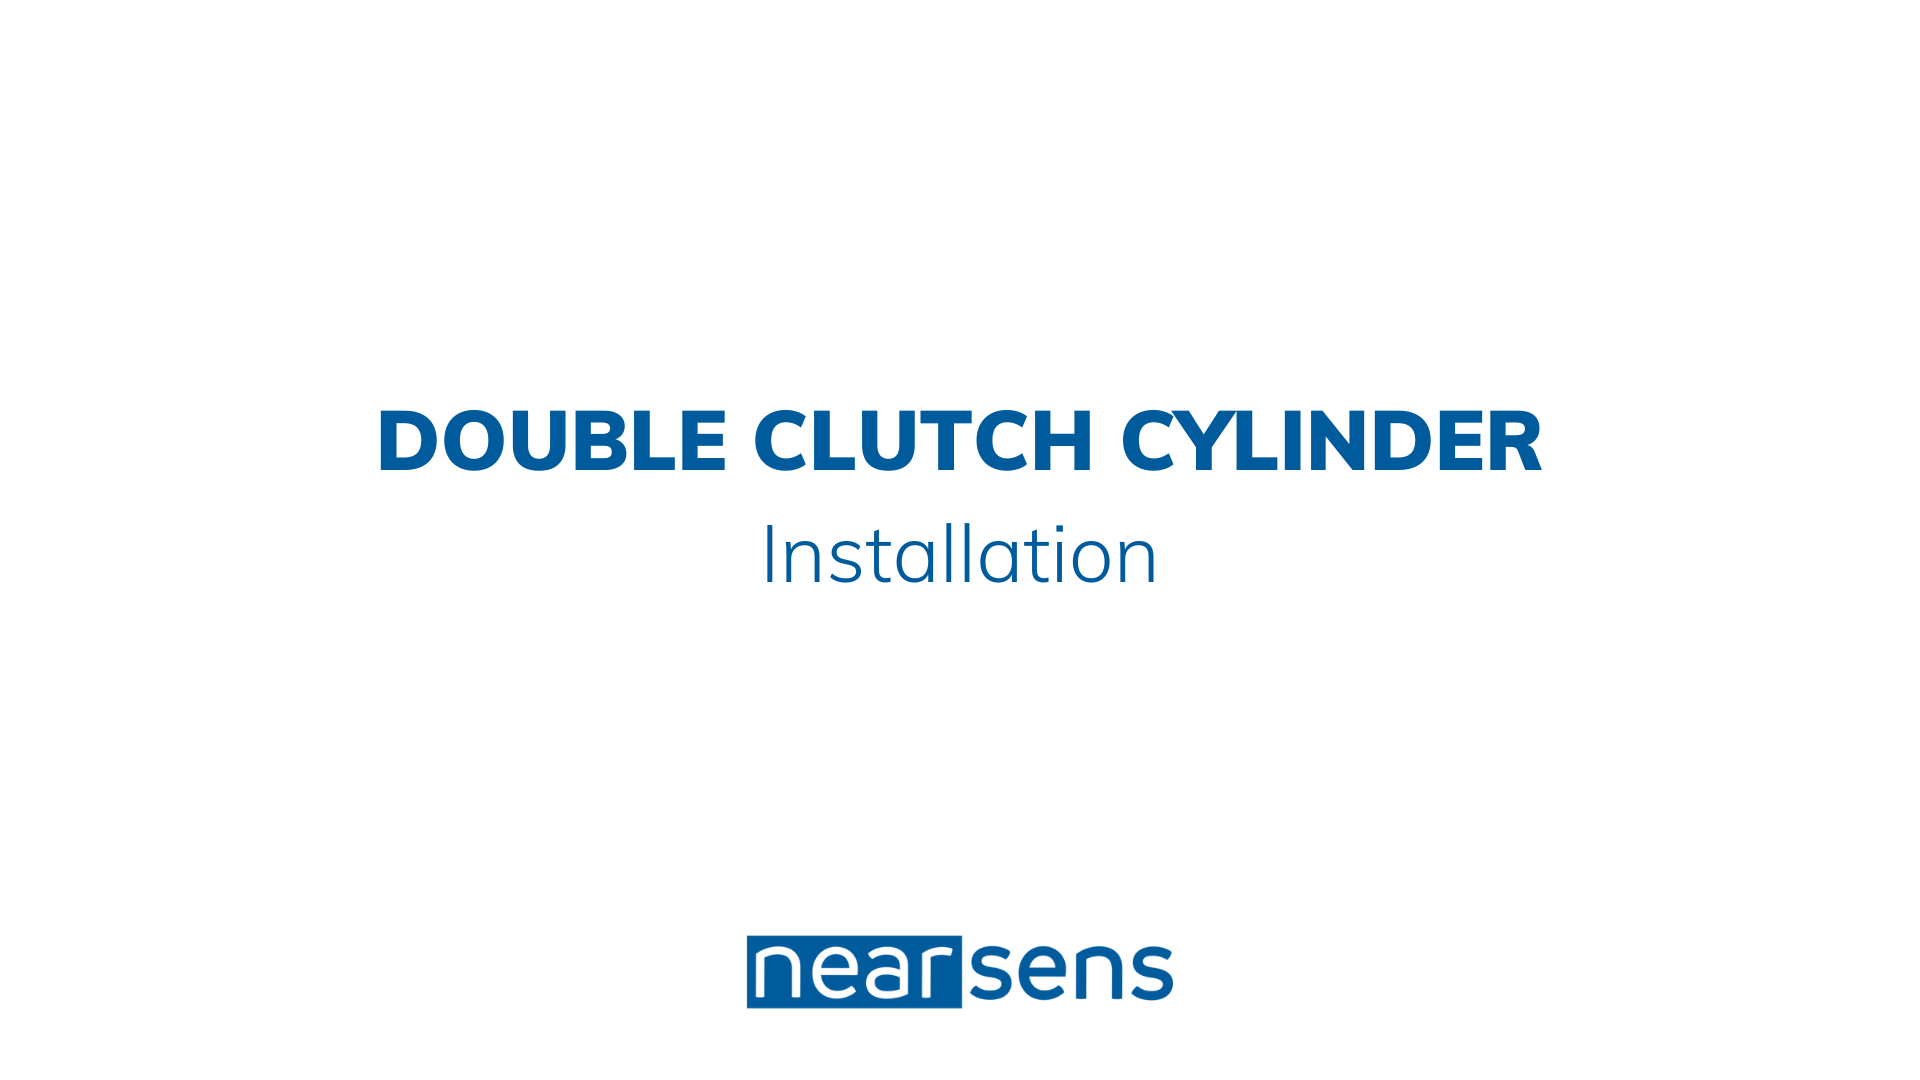 nearsens double clutch cylinder installation